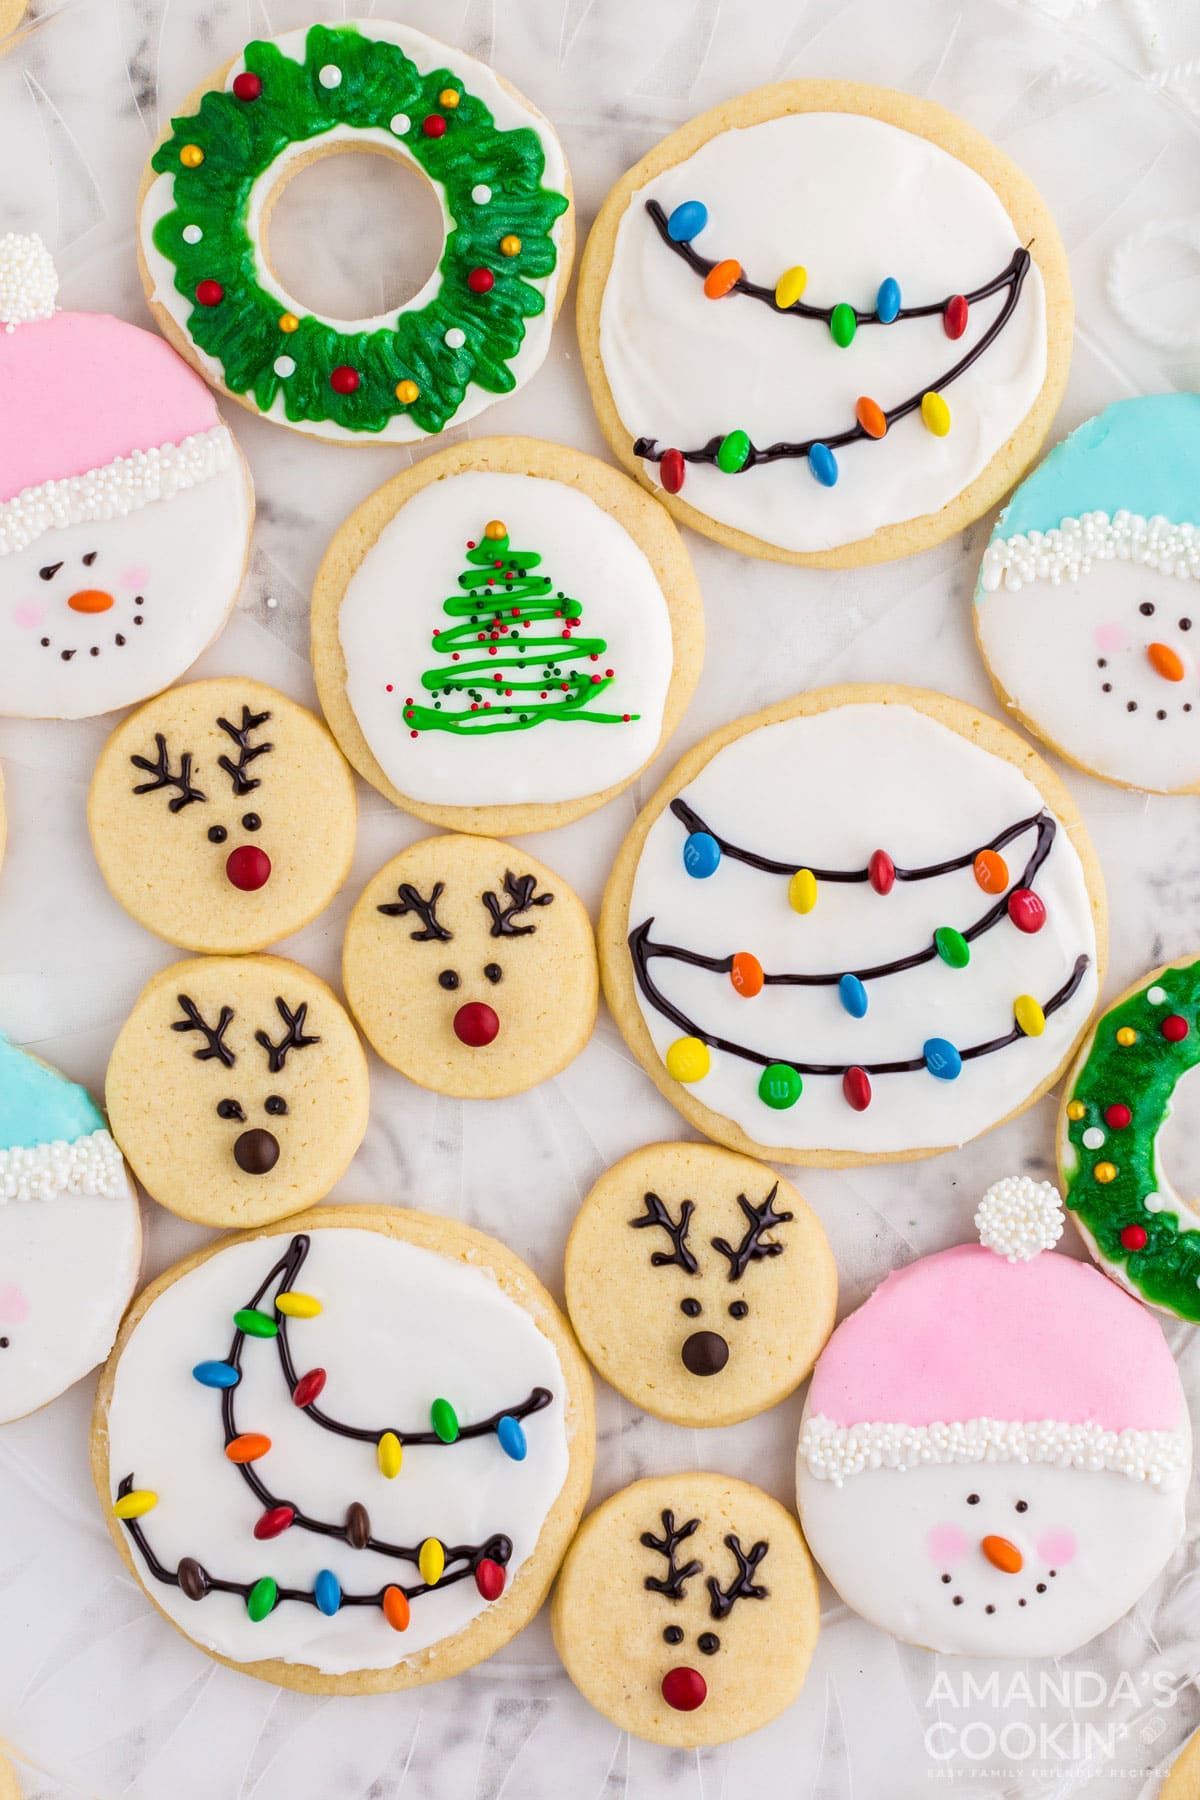 Easy Decorated Sugar Cookies - Amanda's Cookin'